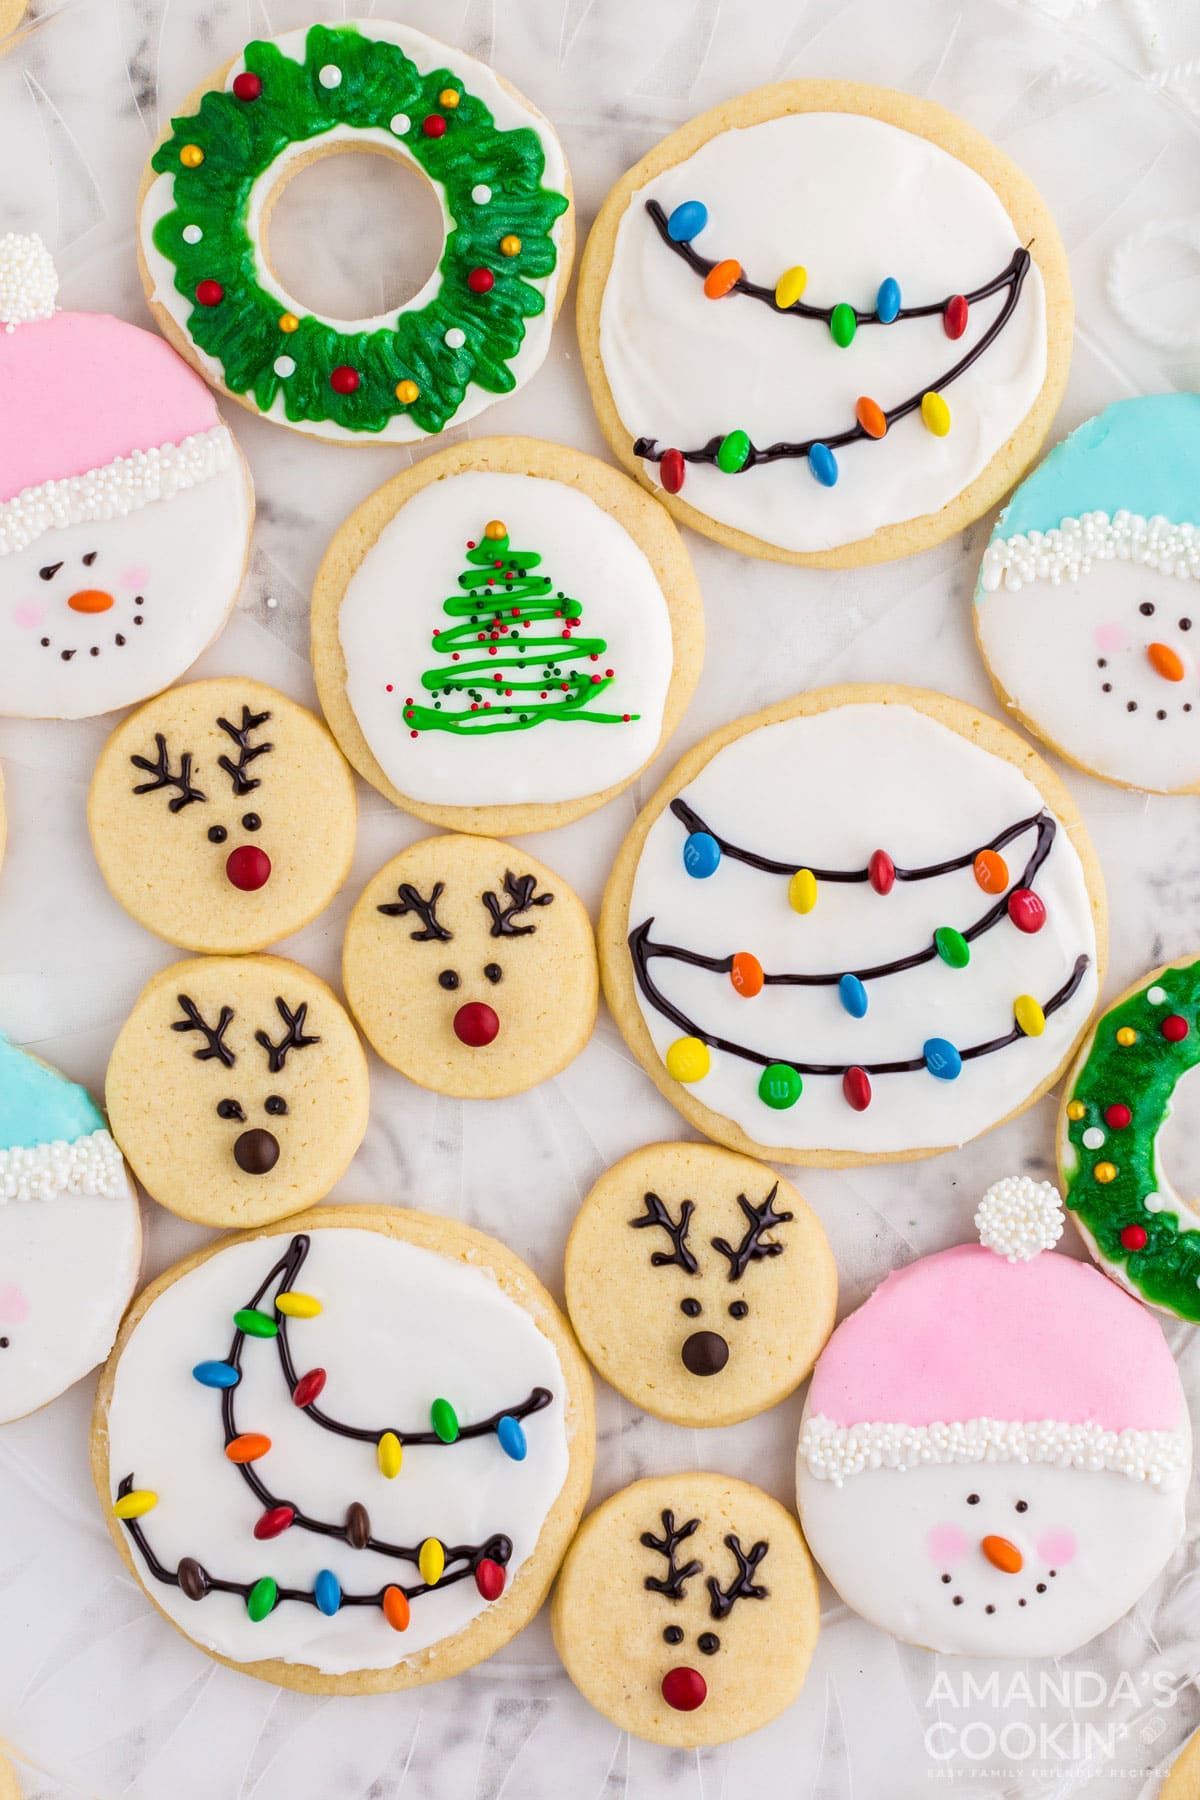 Easy Decorated Sugar Cookies - Amanda's Cookin'